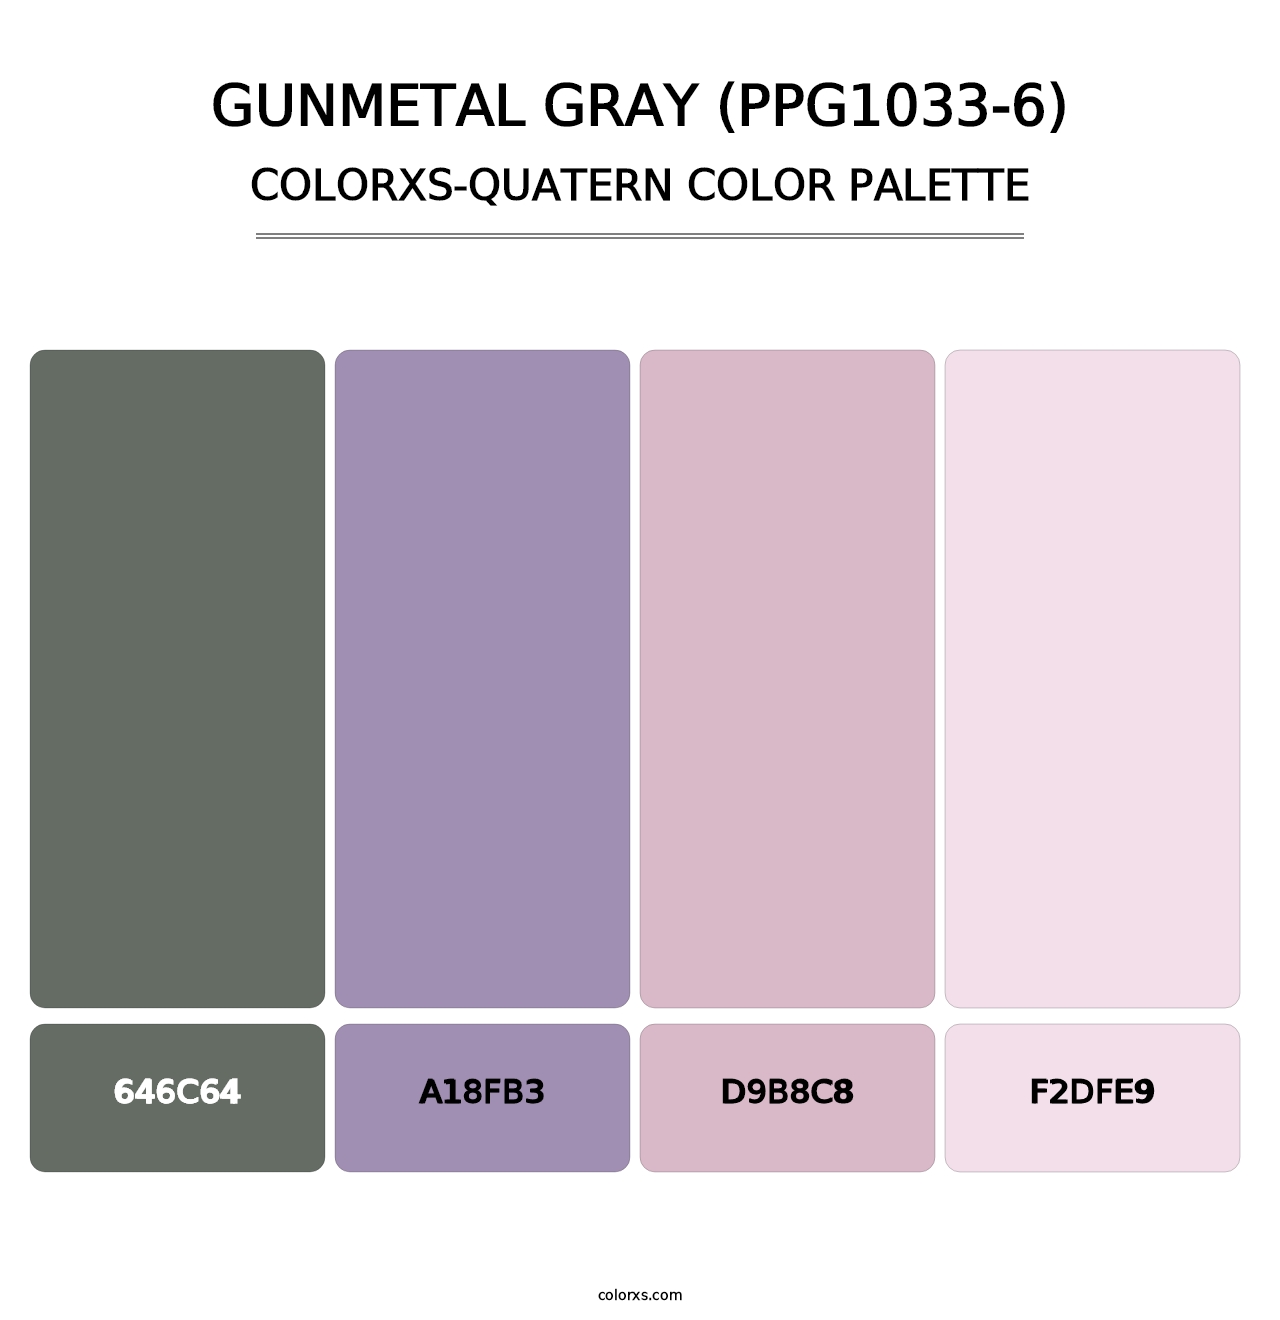 Gunmetal Gray (PPG1033-6) - Colorxs Quatern Palette